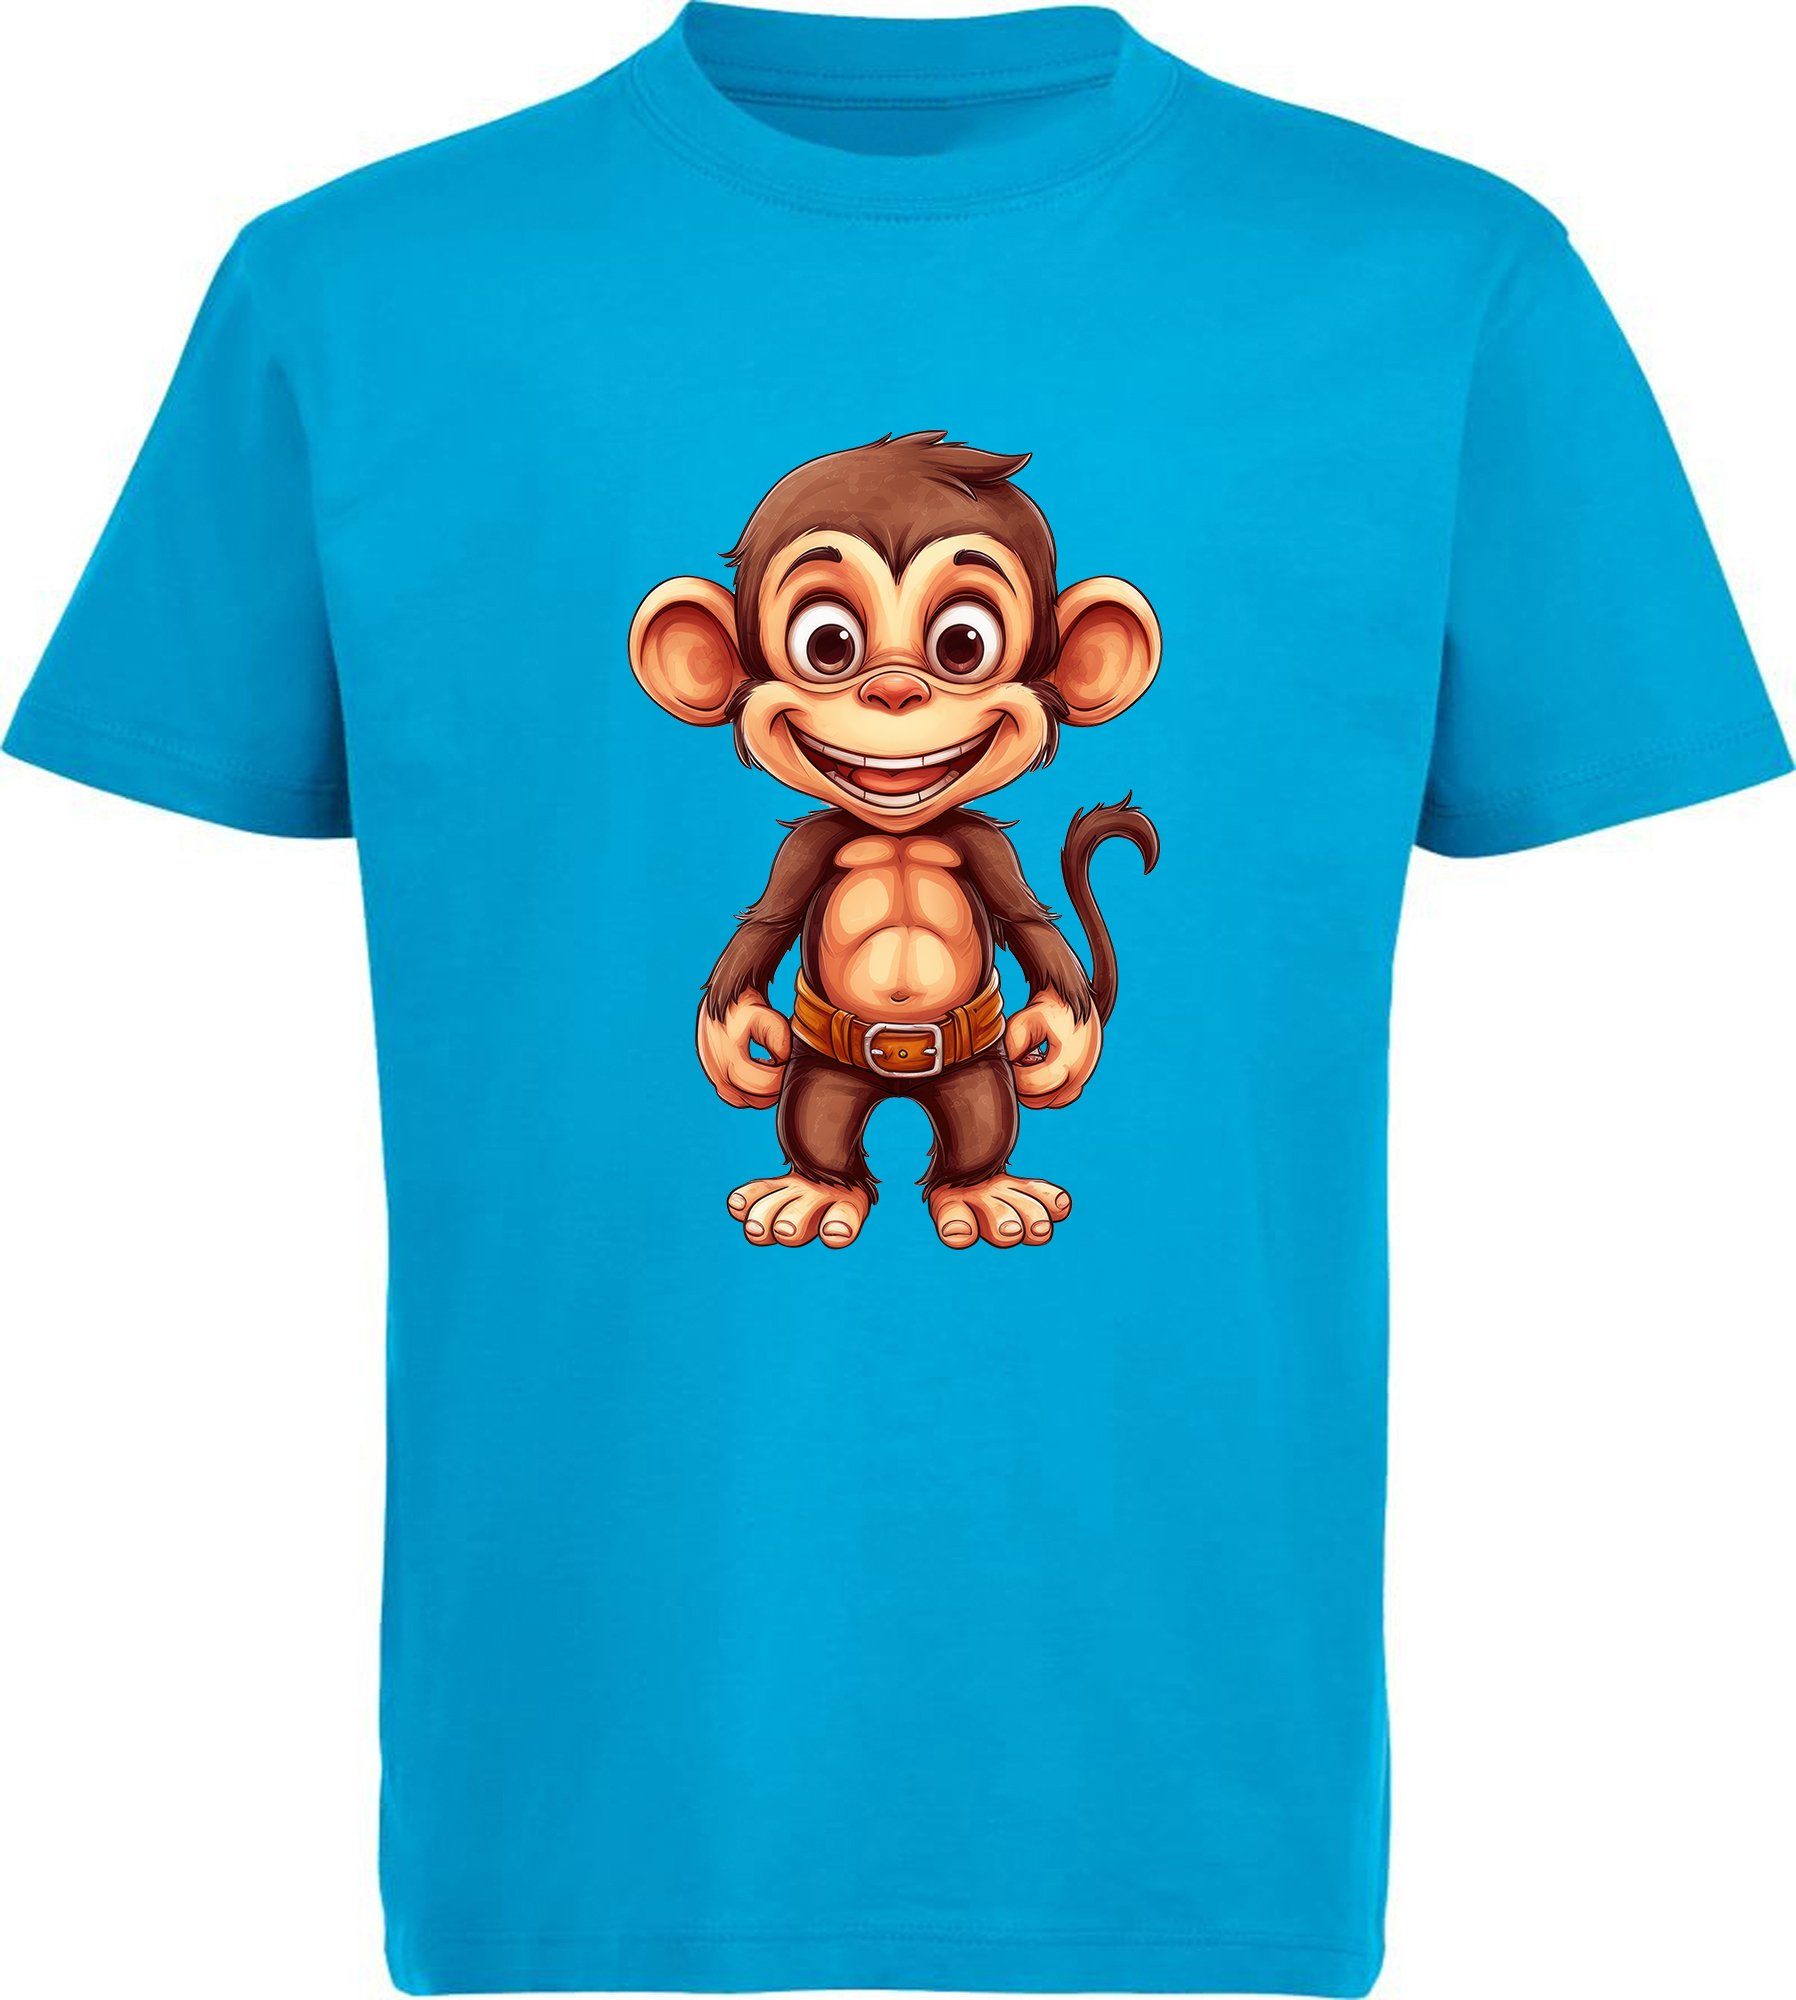 MyDesign24 T-Shirt Kinder blau Shirt aqua bedruckt - Affe i276 Aufdruck, Print Baby Baumwollshirt Wildtier mit Schimpanse